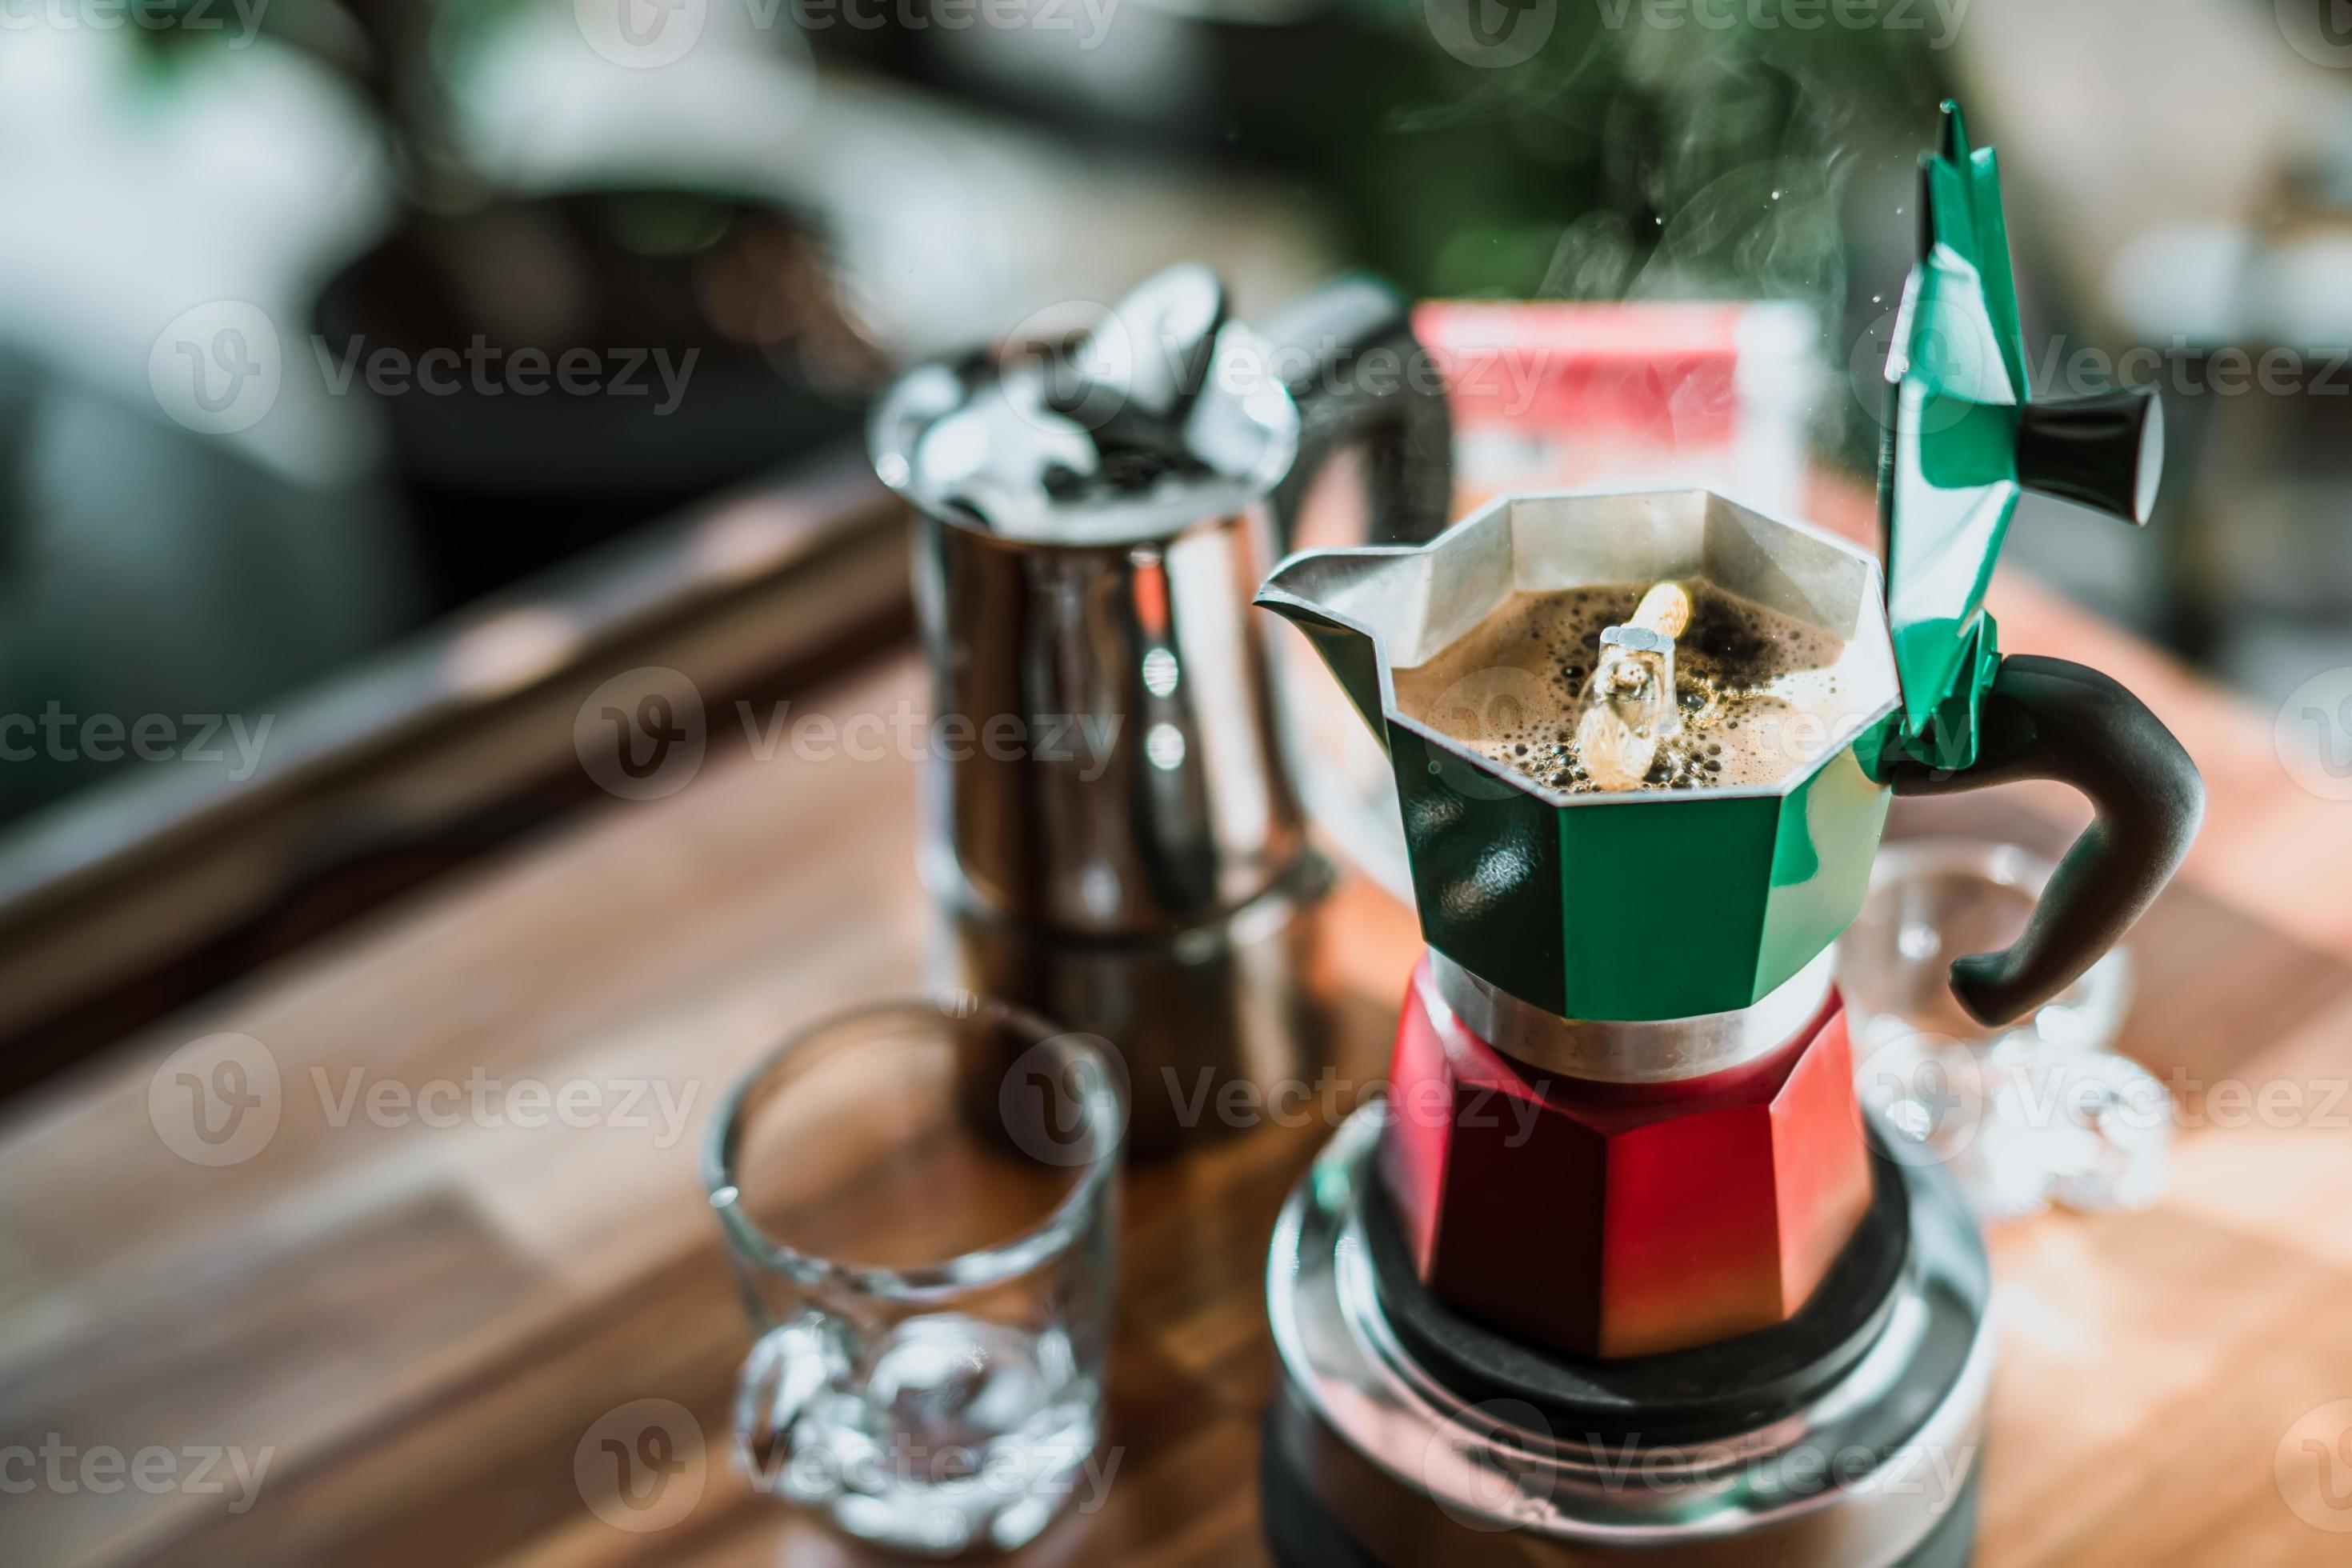 warme koffie in moka pot op elektrisch fornuis, vintage koffiezetapparaat op houten tafel selectieve aandacht. 6965677 Stockfoto